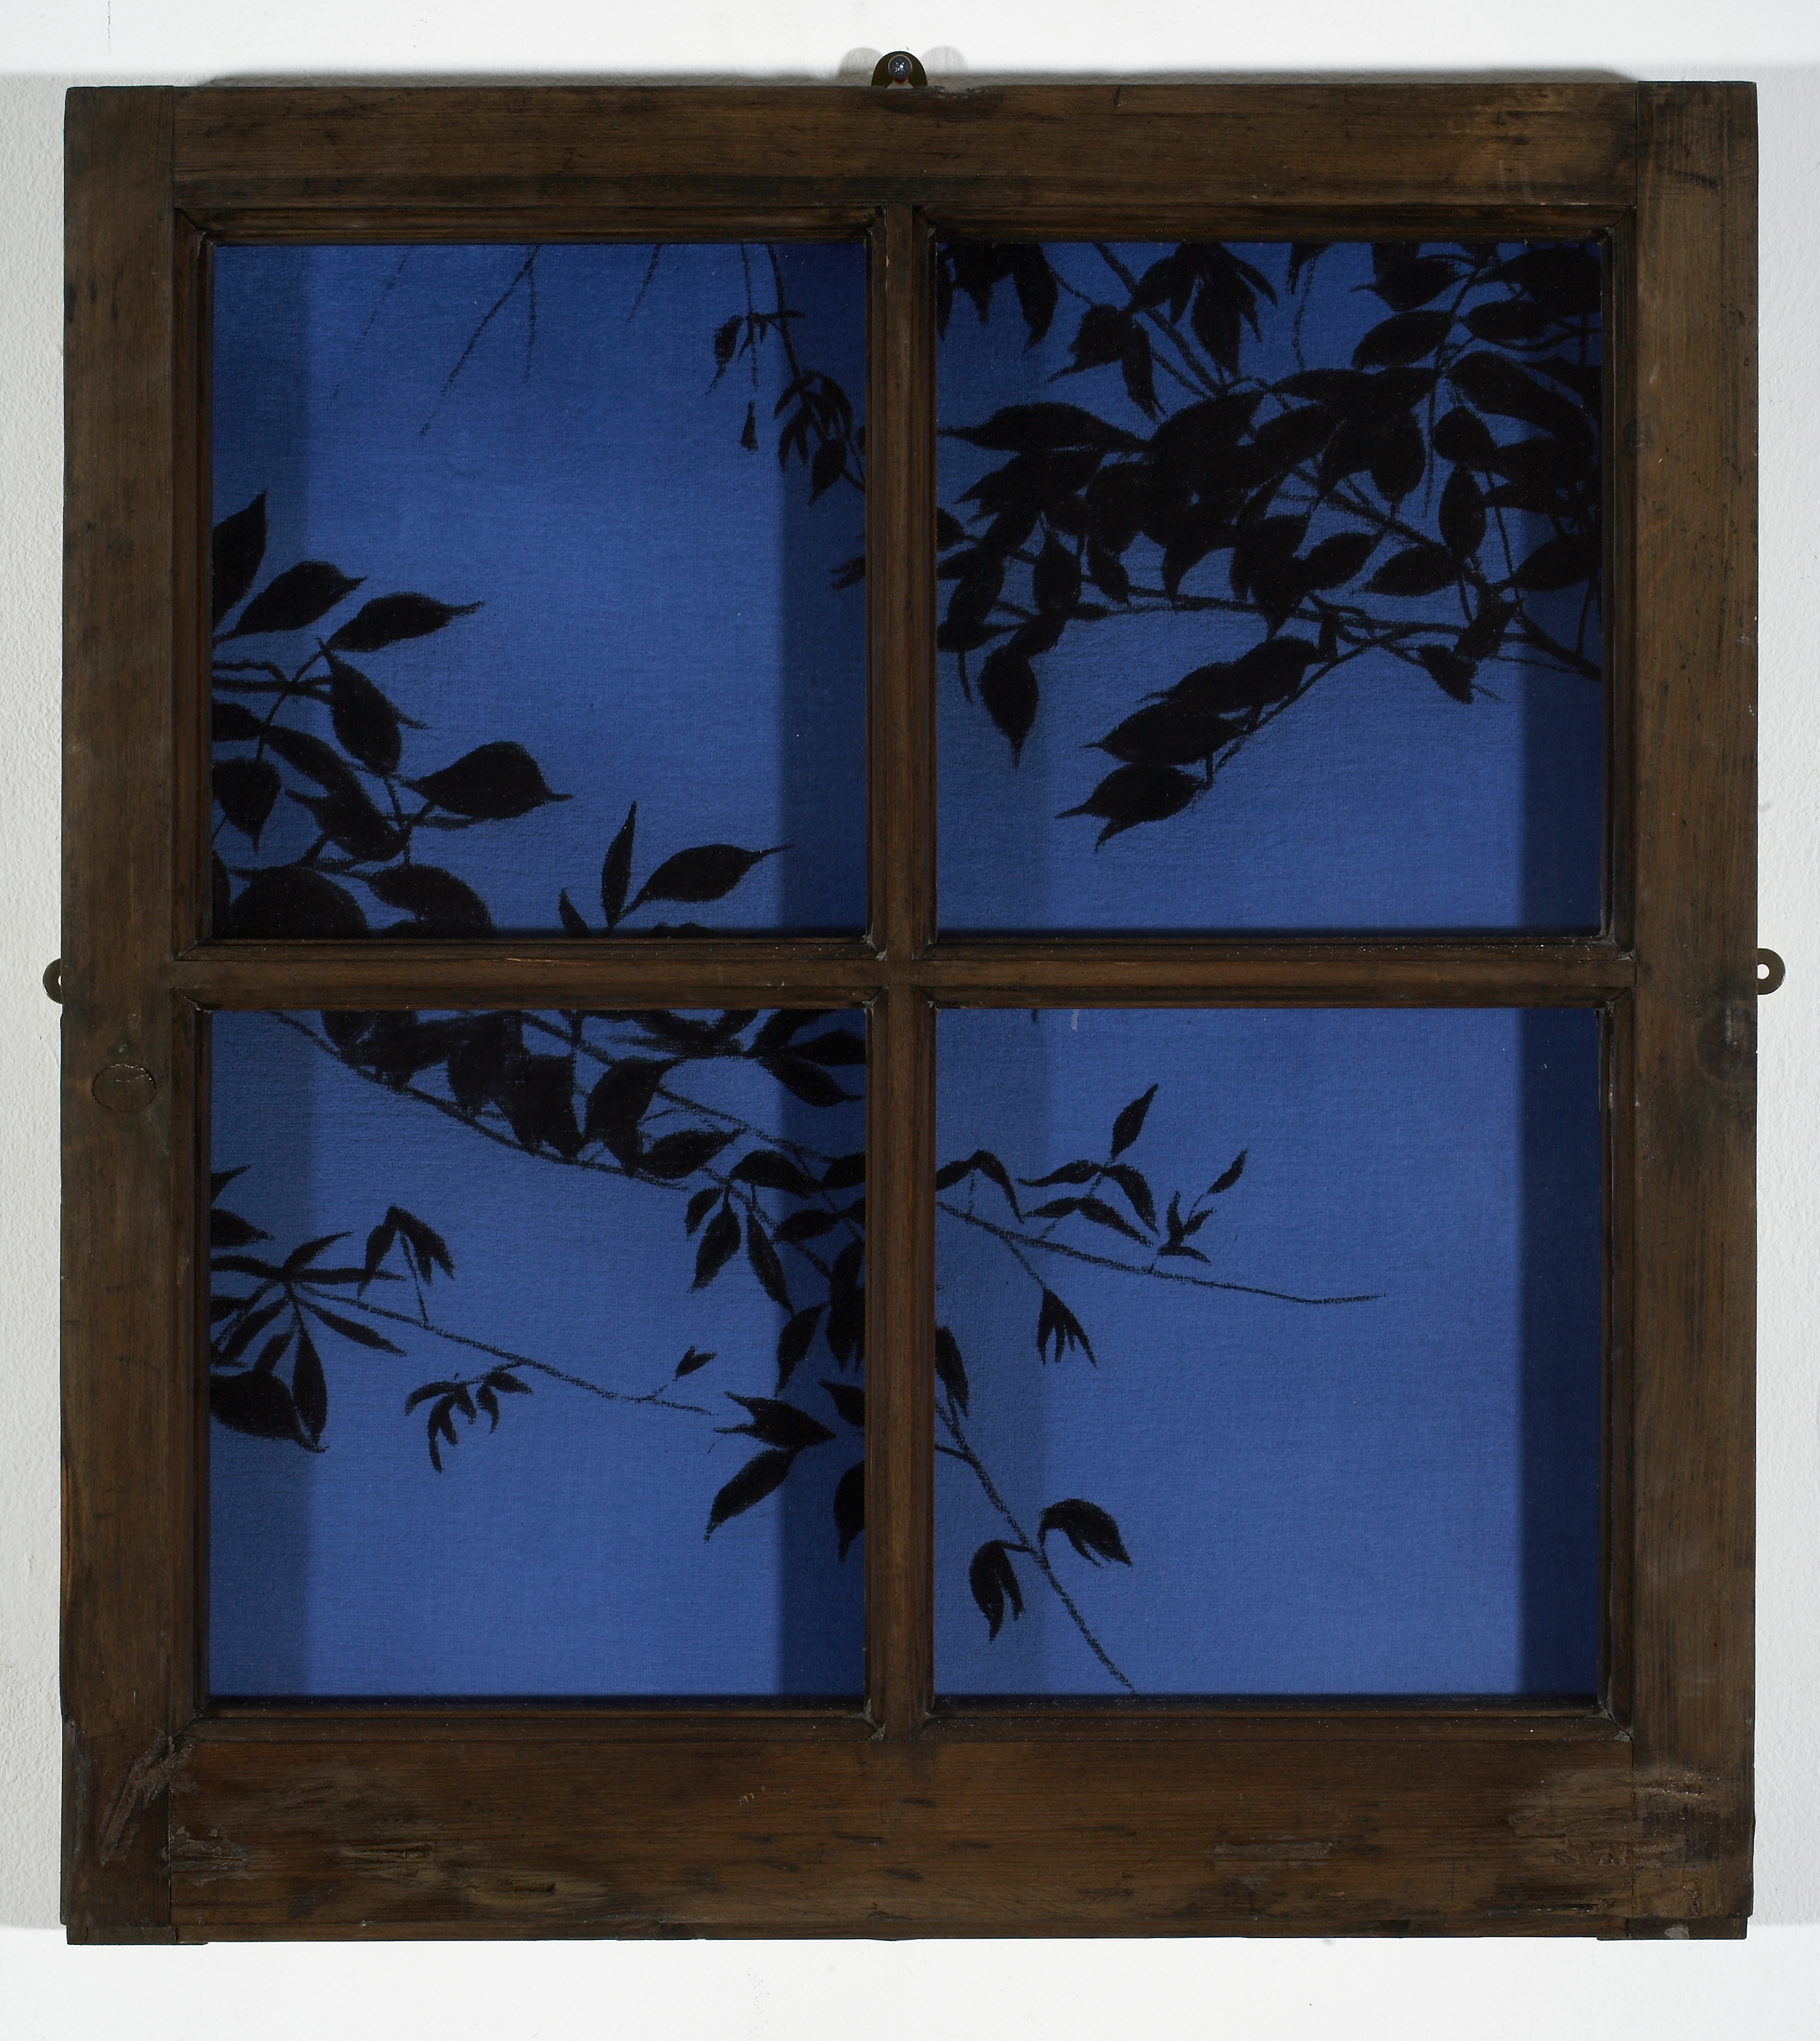 Rachel McDonnell, Window III, The Auction Collective